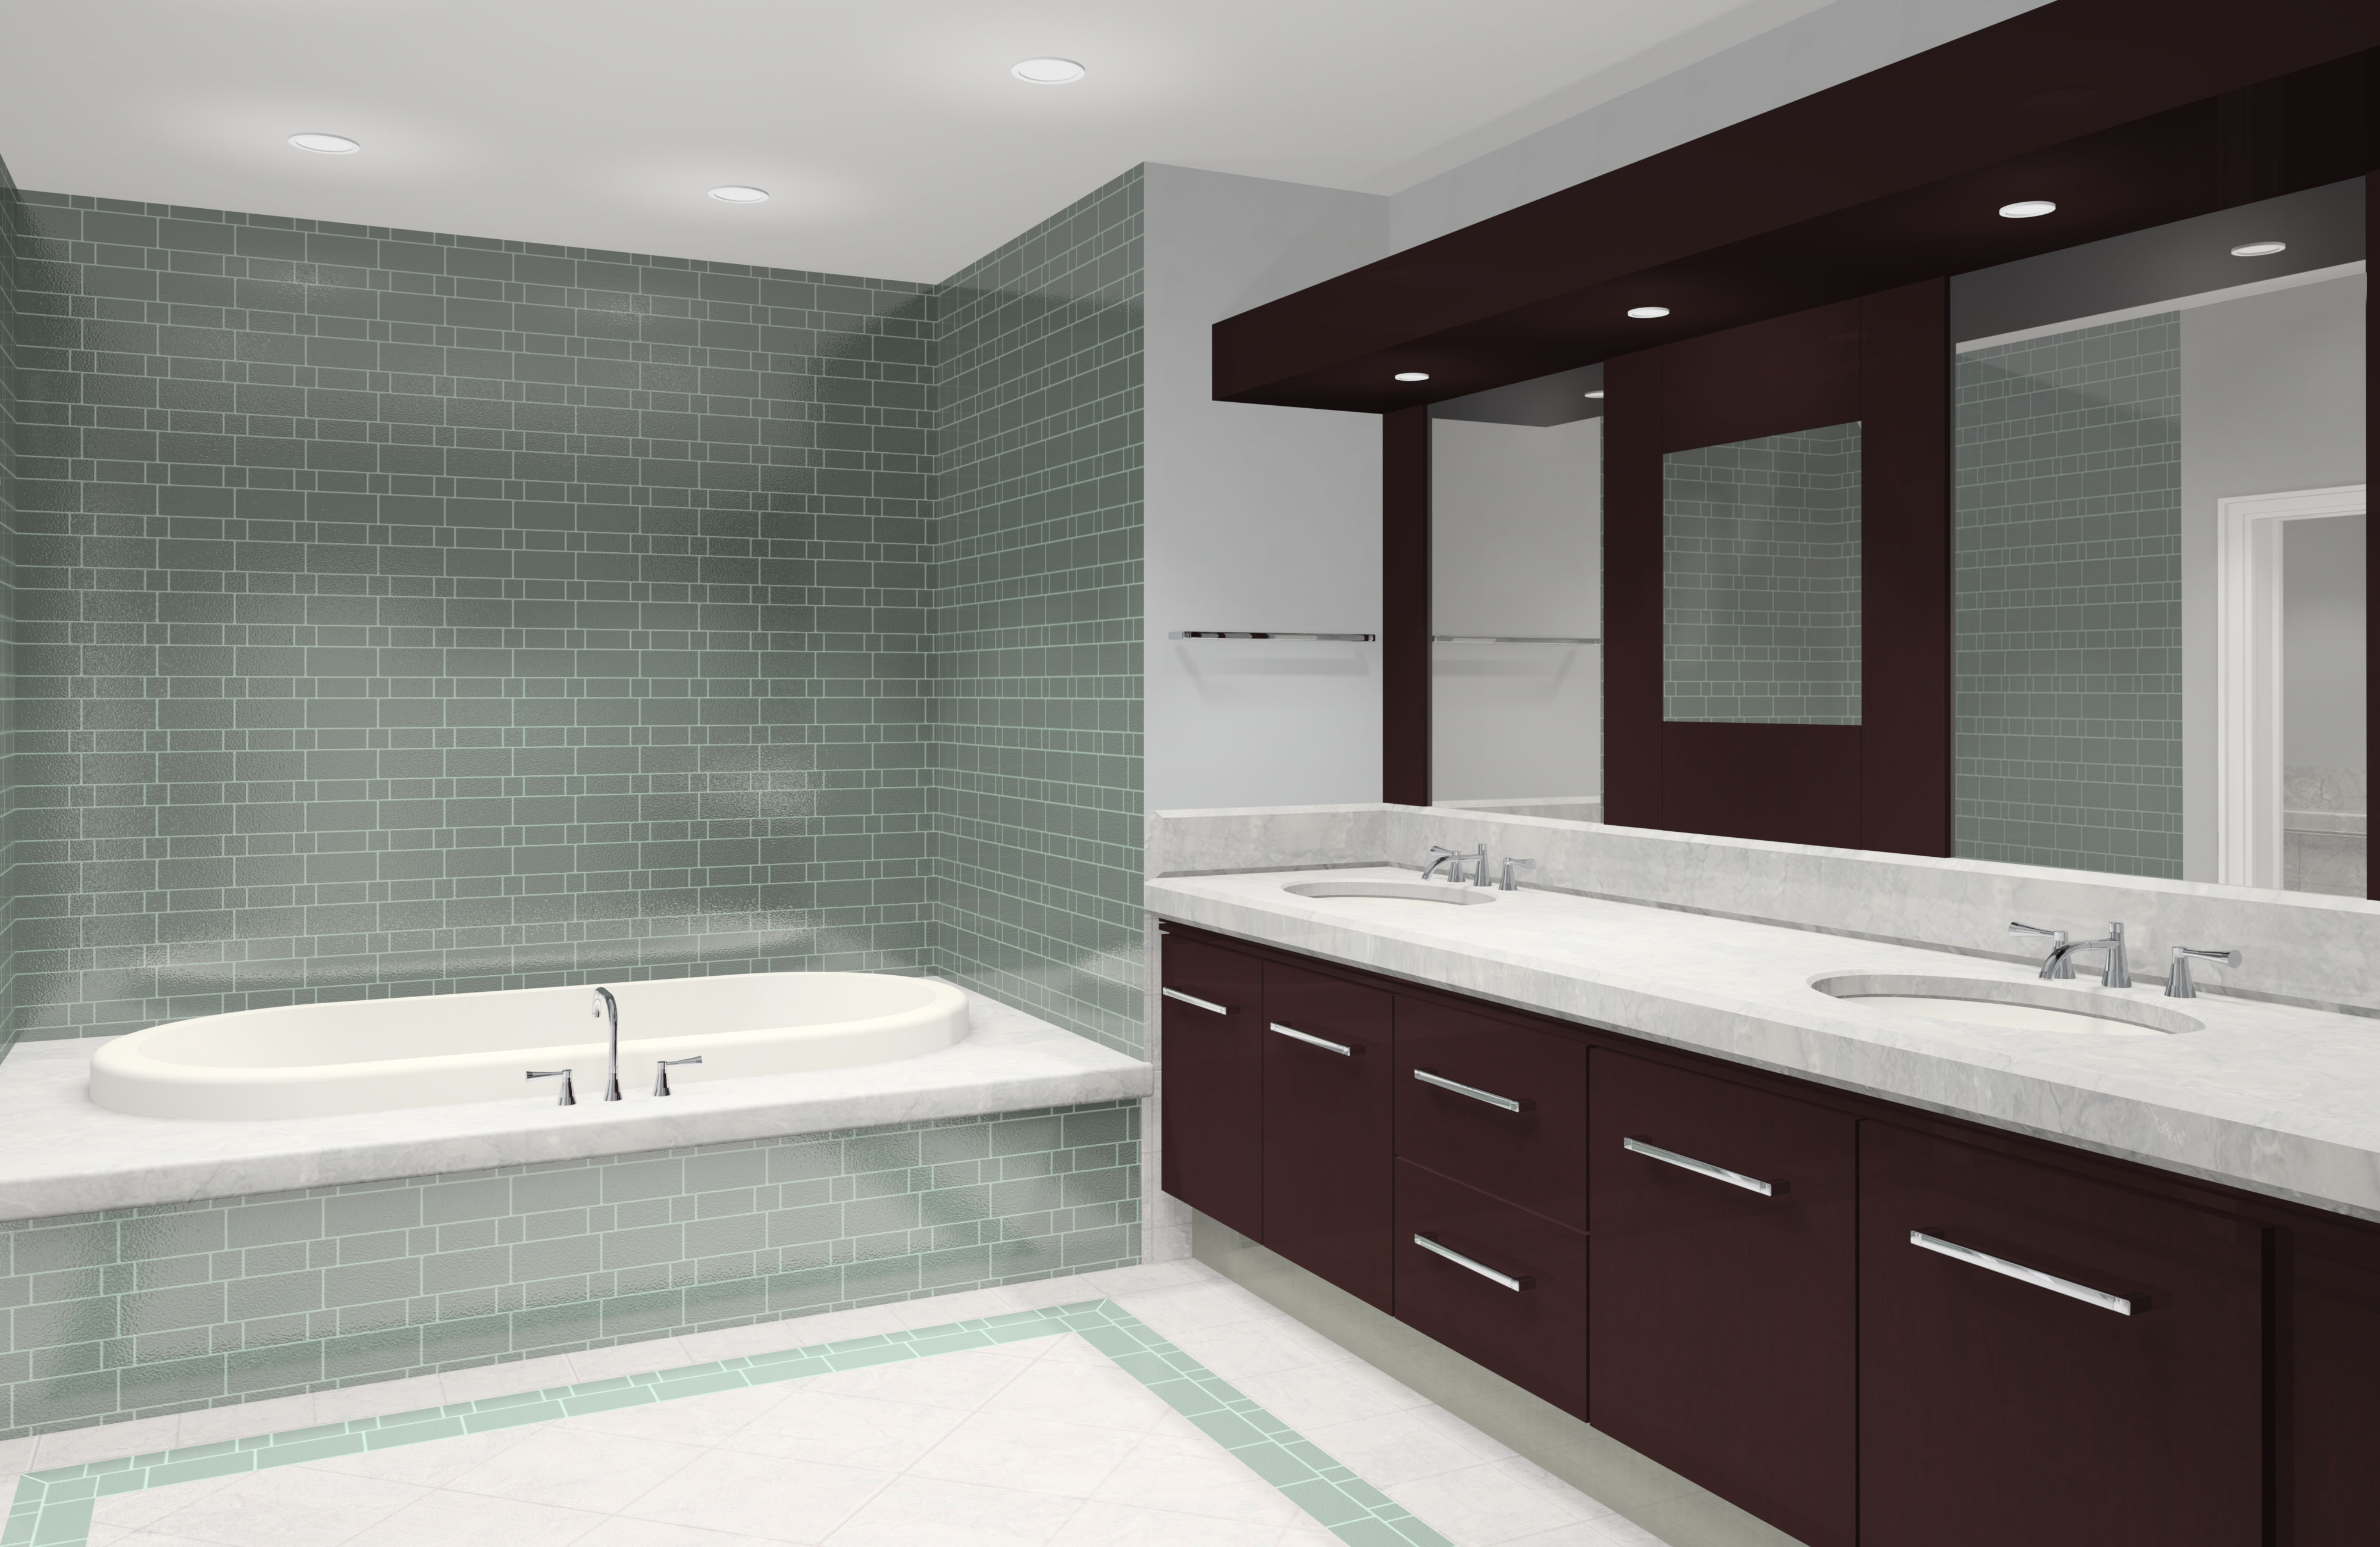 small-space-modern-bathroom-tile-design-ideas-cool-modern-bathroom-design-inspirations